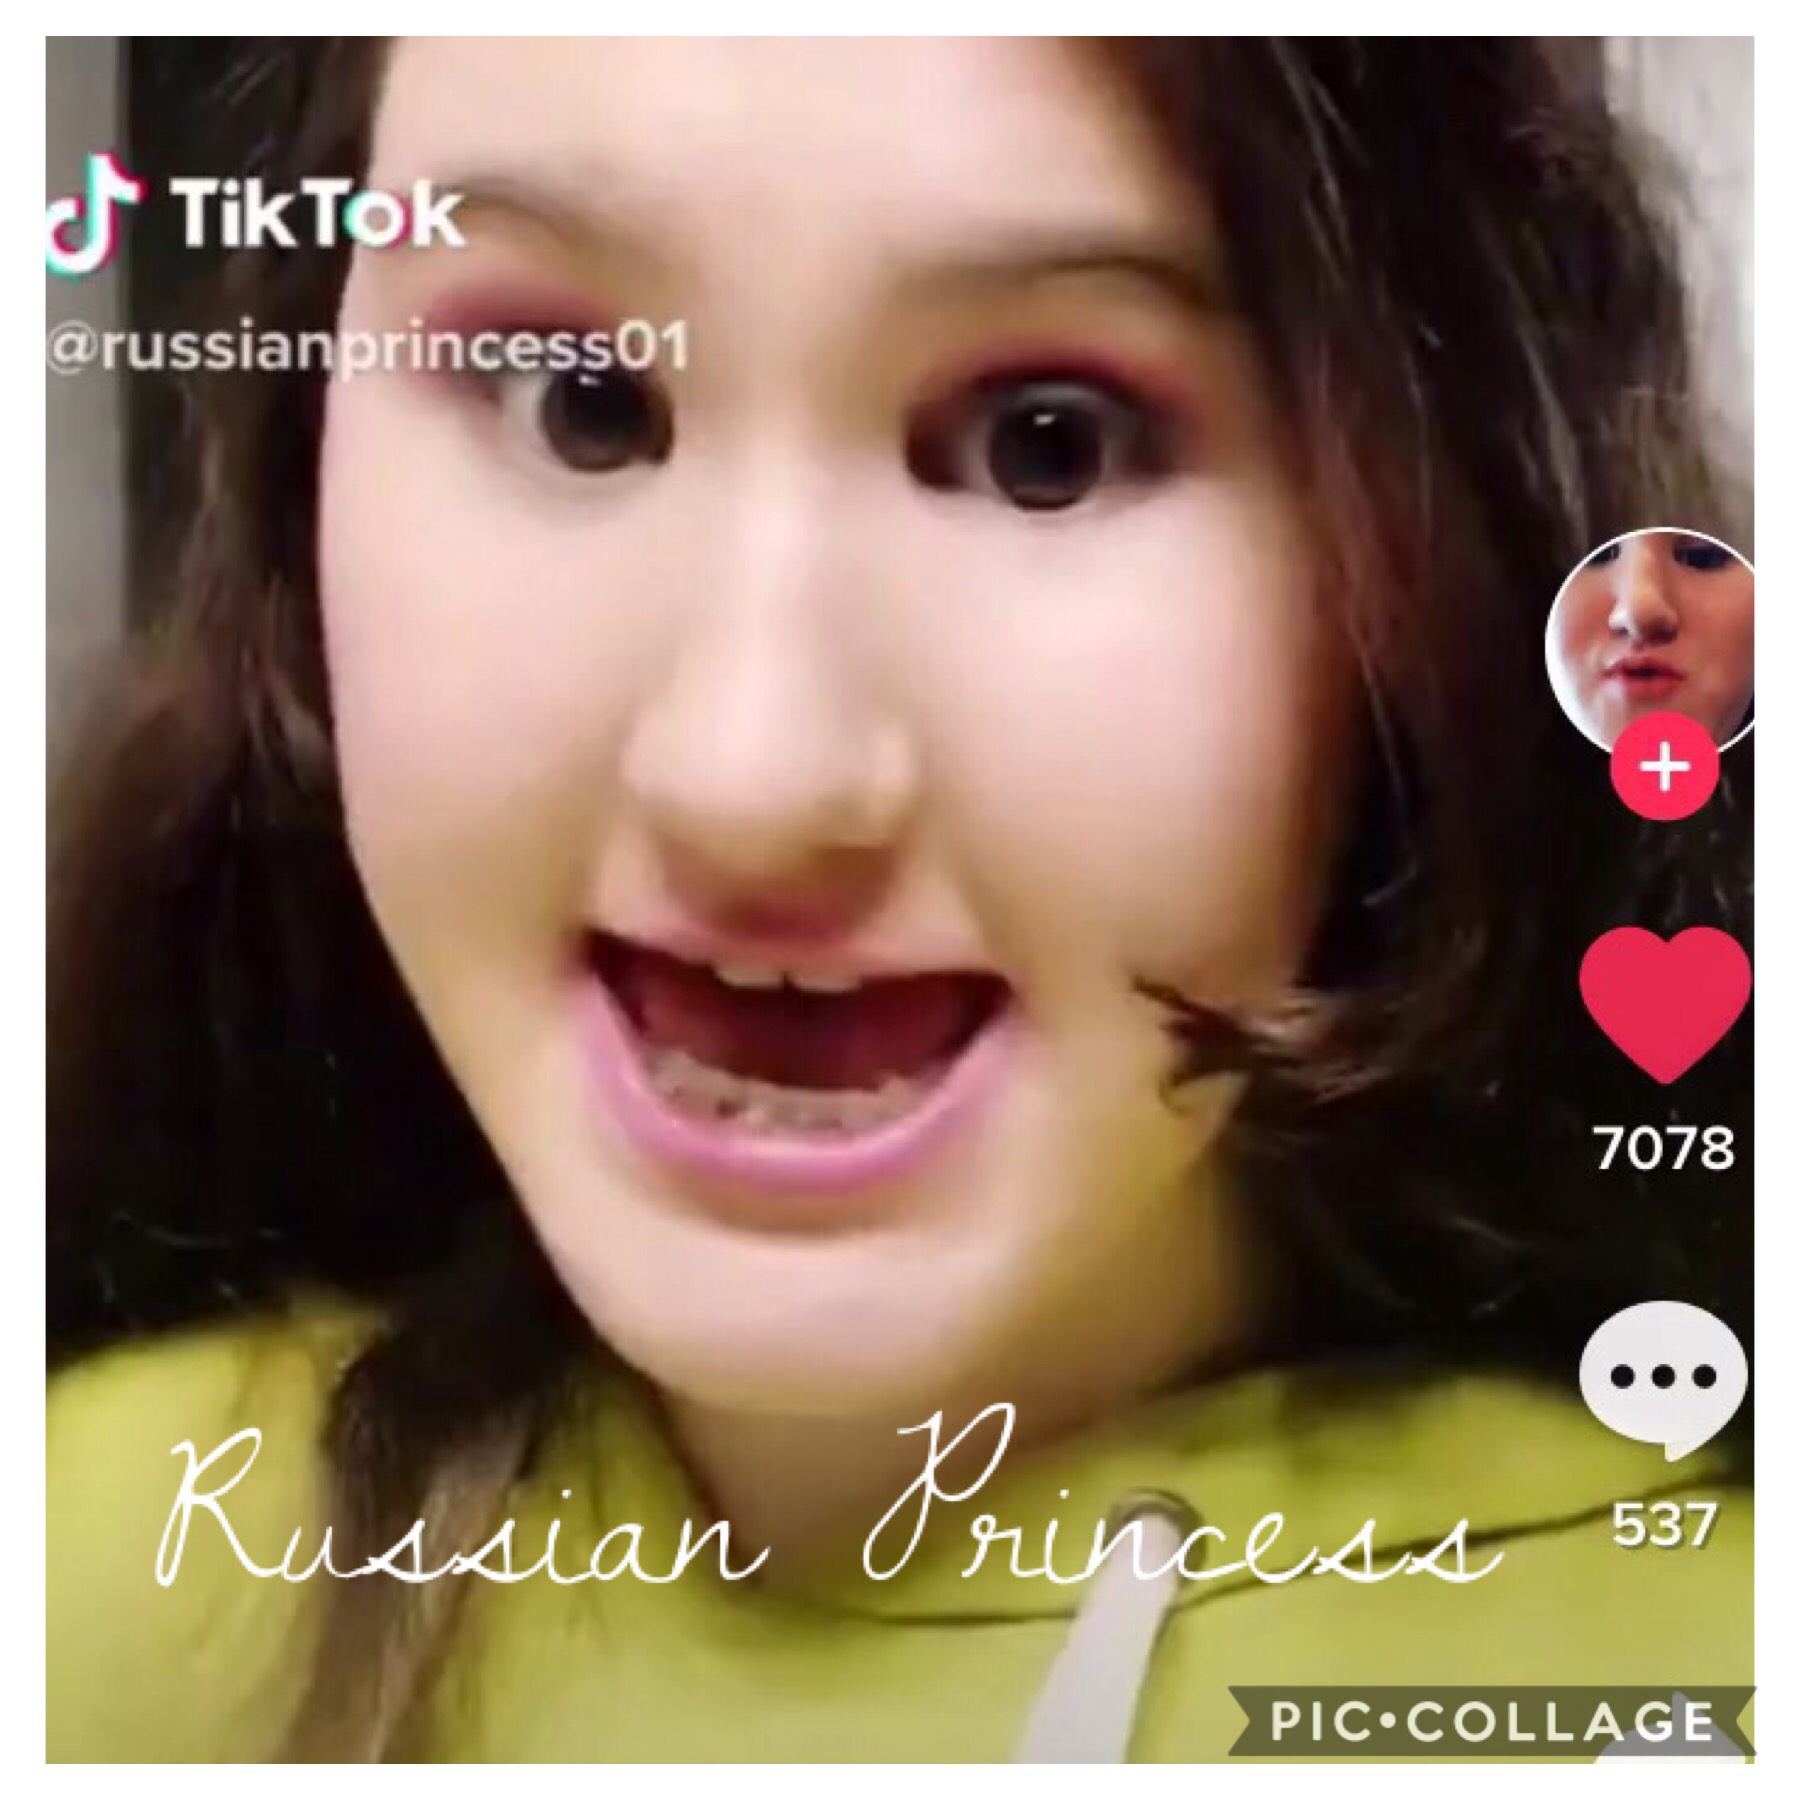 Russian princess 😂👌